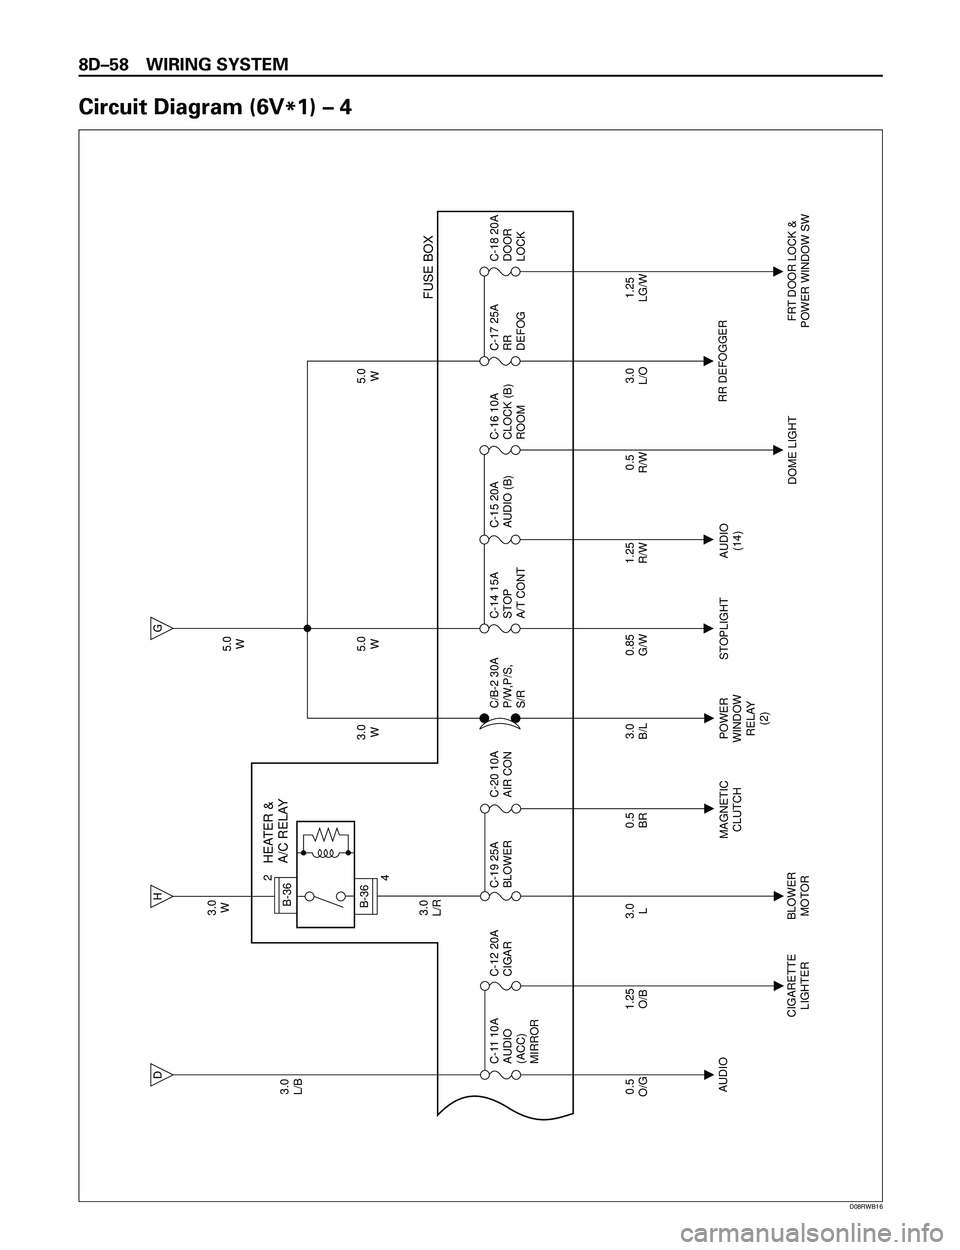 ISUZU TROOPER 1998  Service Repair Manual 8DÐ58 WIRING SYSTEM
Circuit Diagram (6V
*1) Ð 4
D
H
G
3.0
W
3.0
L/R 3.0
L/B
0.5
O/G
AUDIO
CIGARETTE
LIGHTERBLOWER
MOTORMAGNETIC
CLUTCHPOWER
WINDOW
RELAY
(2)STOPLIGHT AUDIO
(14)
DOME LIGHTRR DEFOGGER